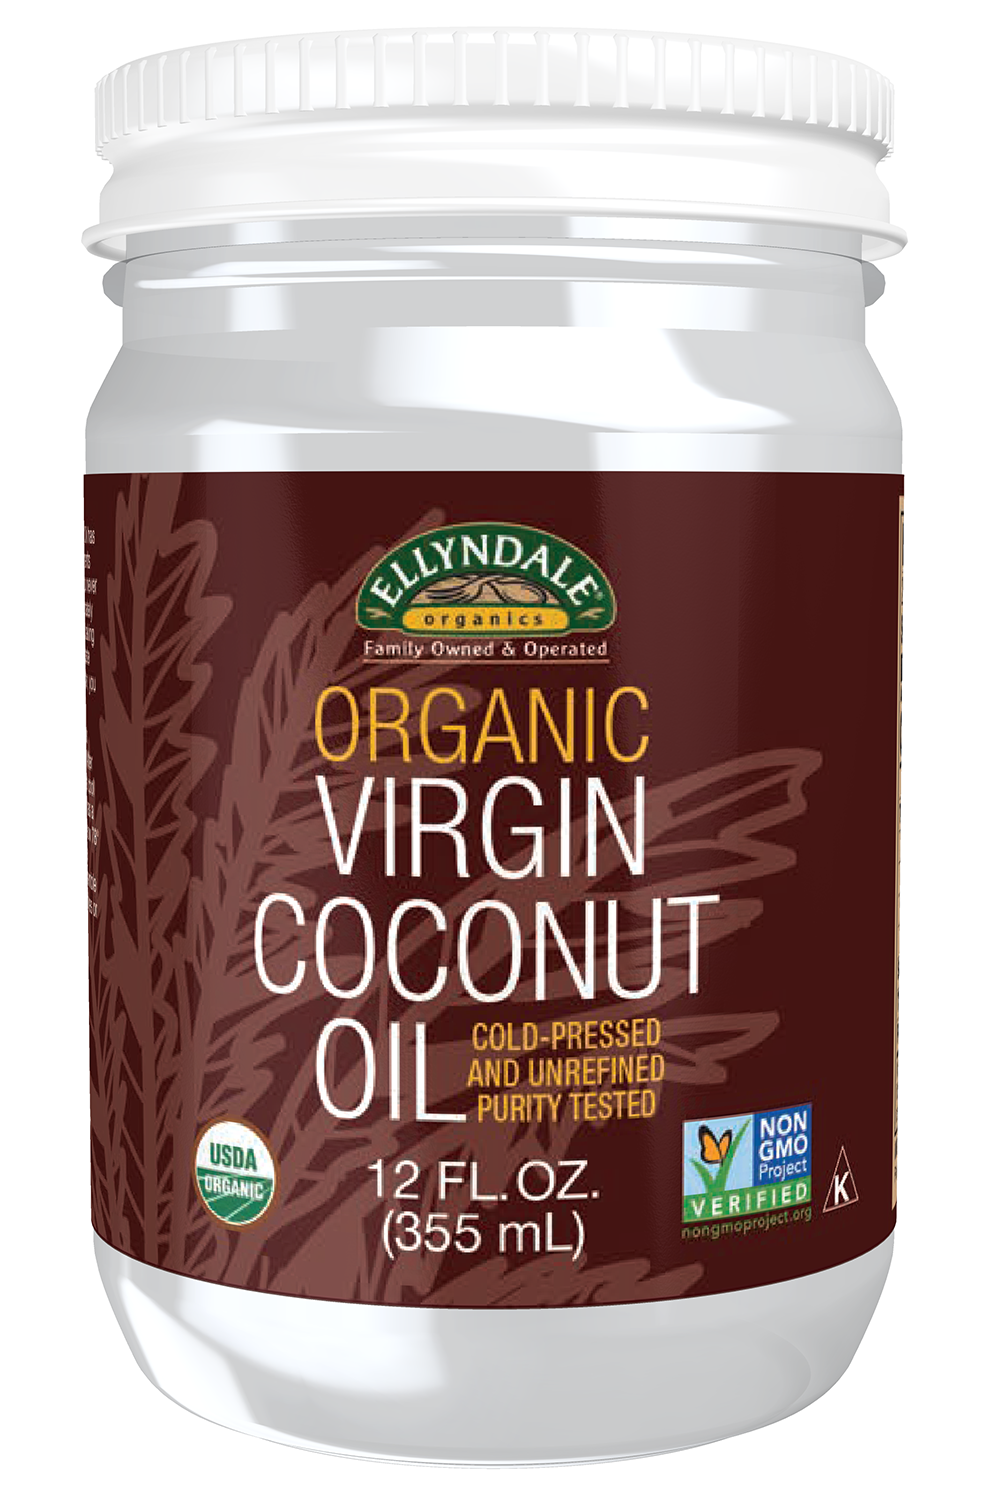 Virgin Coconut Oil in Glass Jar, Organic - 12 fl. oz. Jar Front